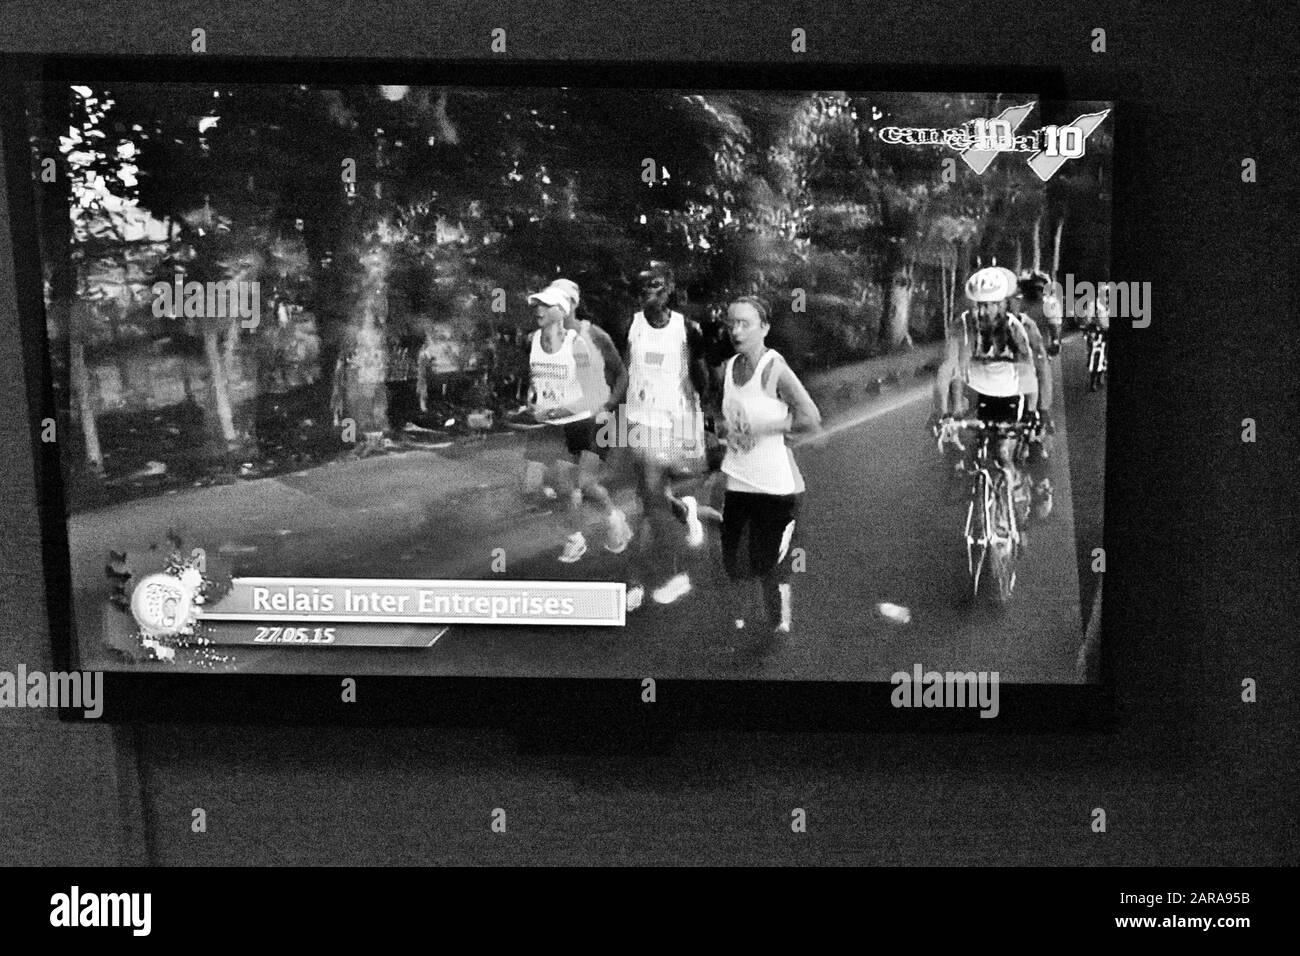 TV news, marathon runners, Paris, France, Europe Stock Photo